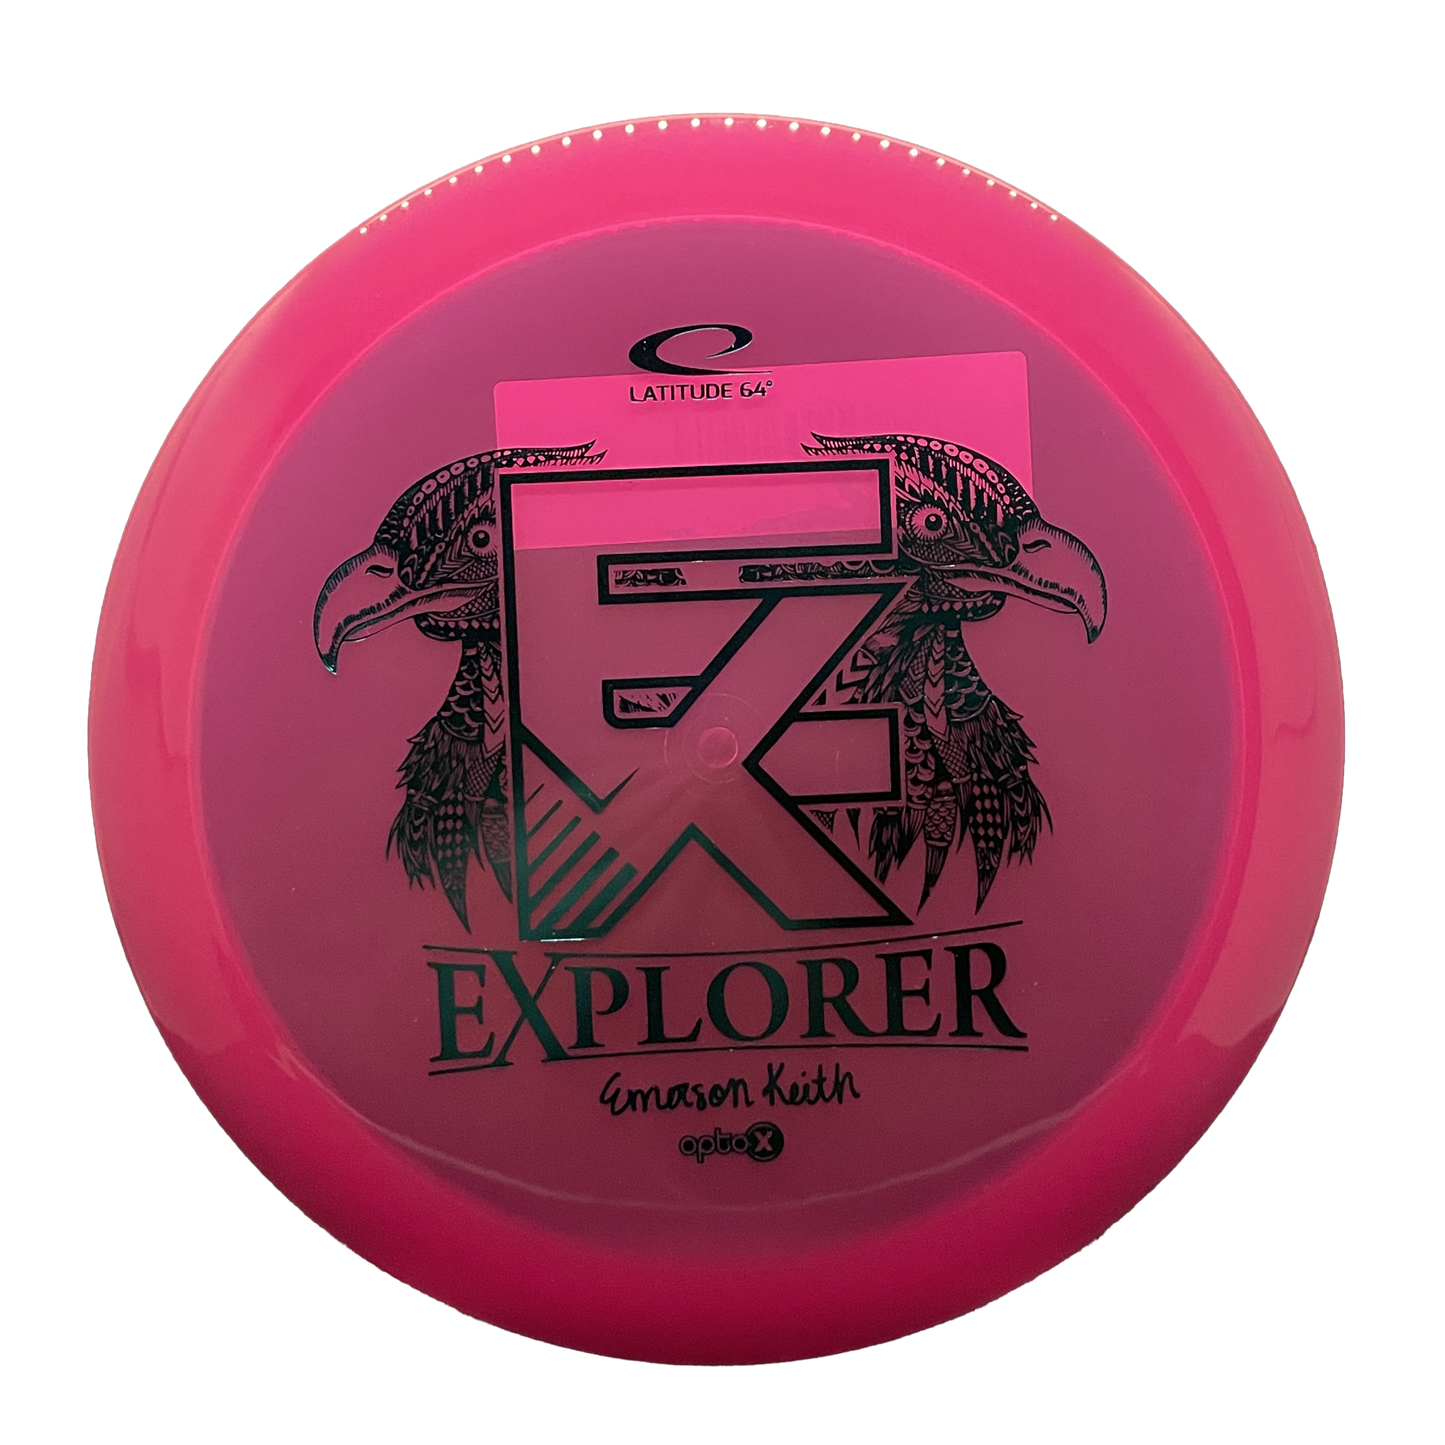 Latitude 64 Opto -X Explorer Emerson Keith 2022 - Fairway Driver